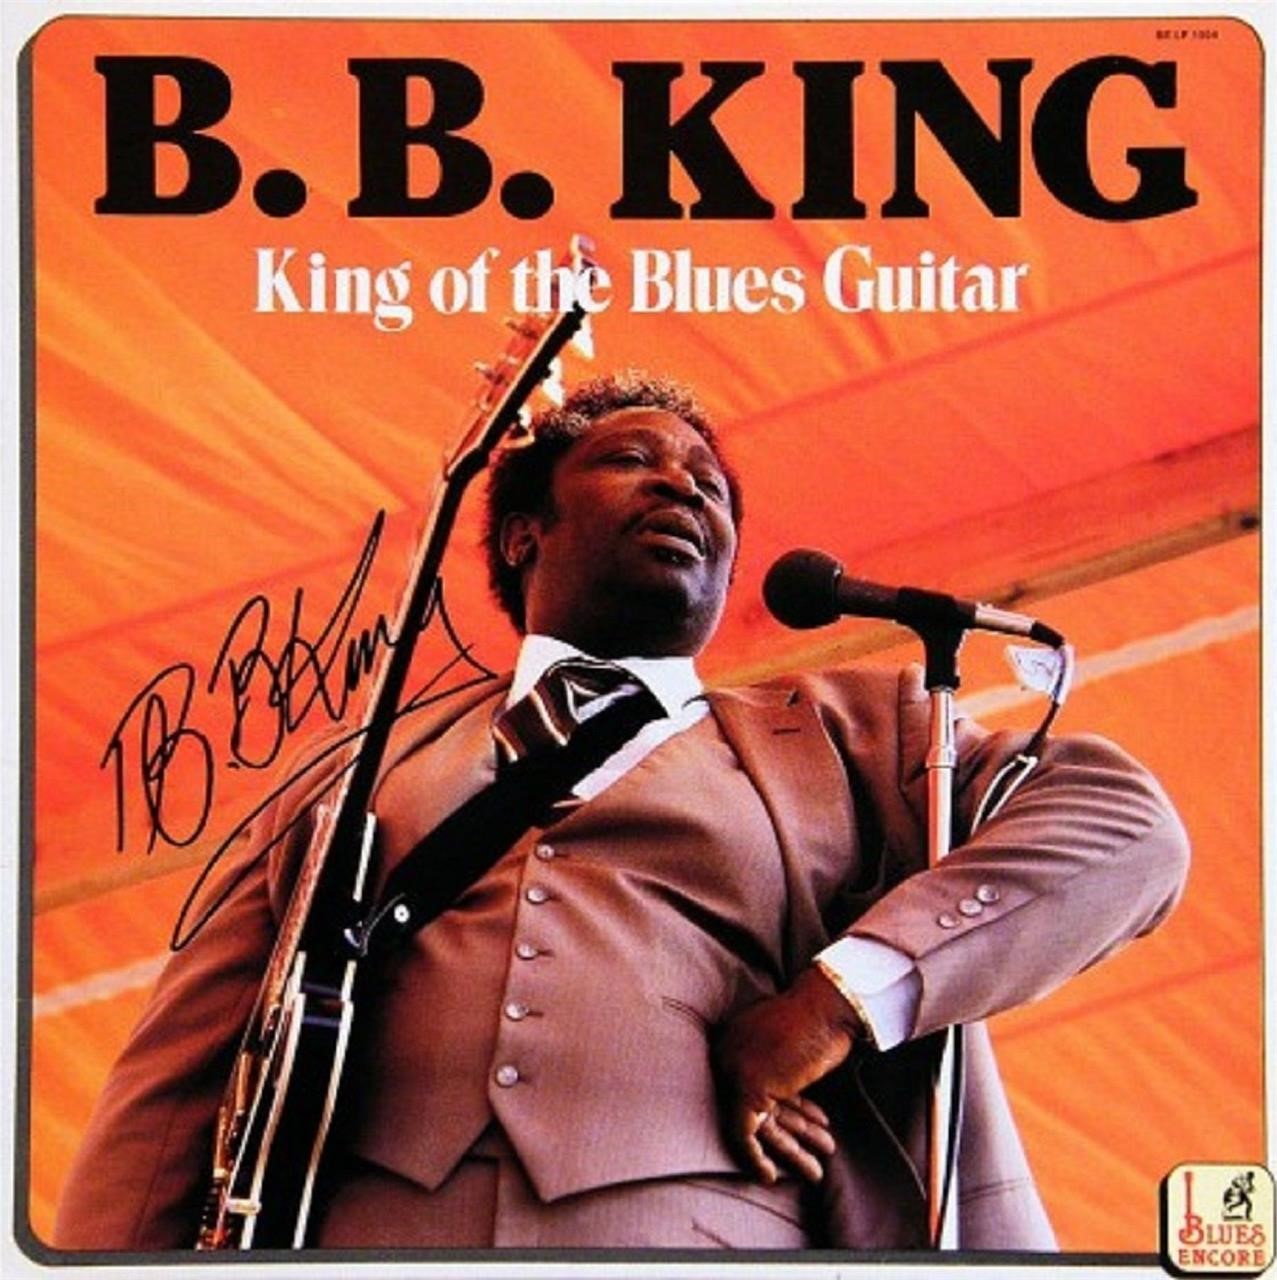 B.B. King signed "King Of The Blues Guitar" album